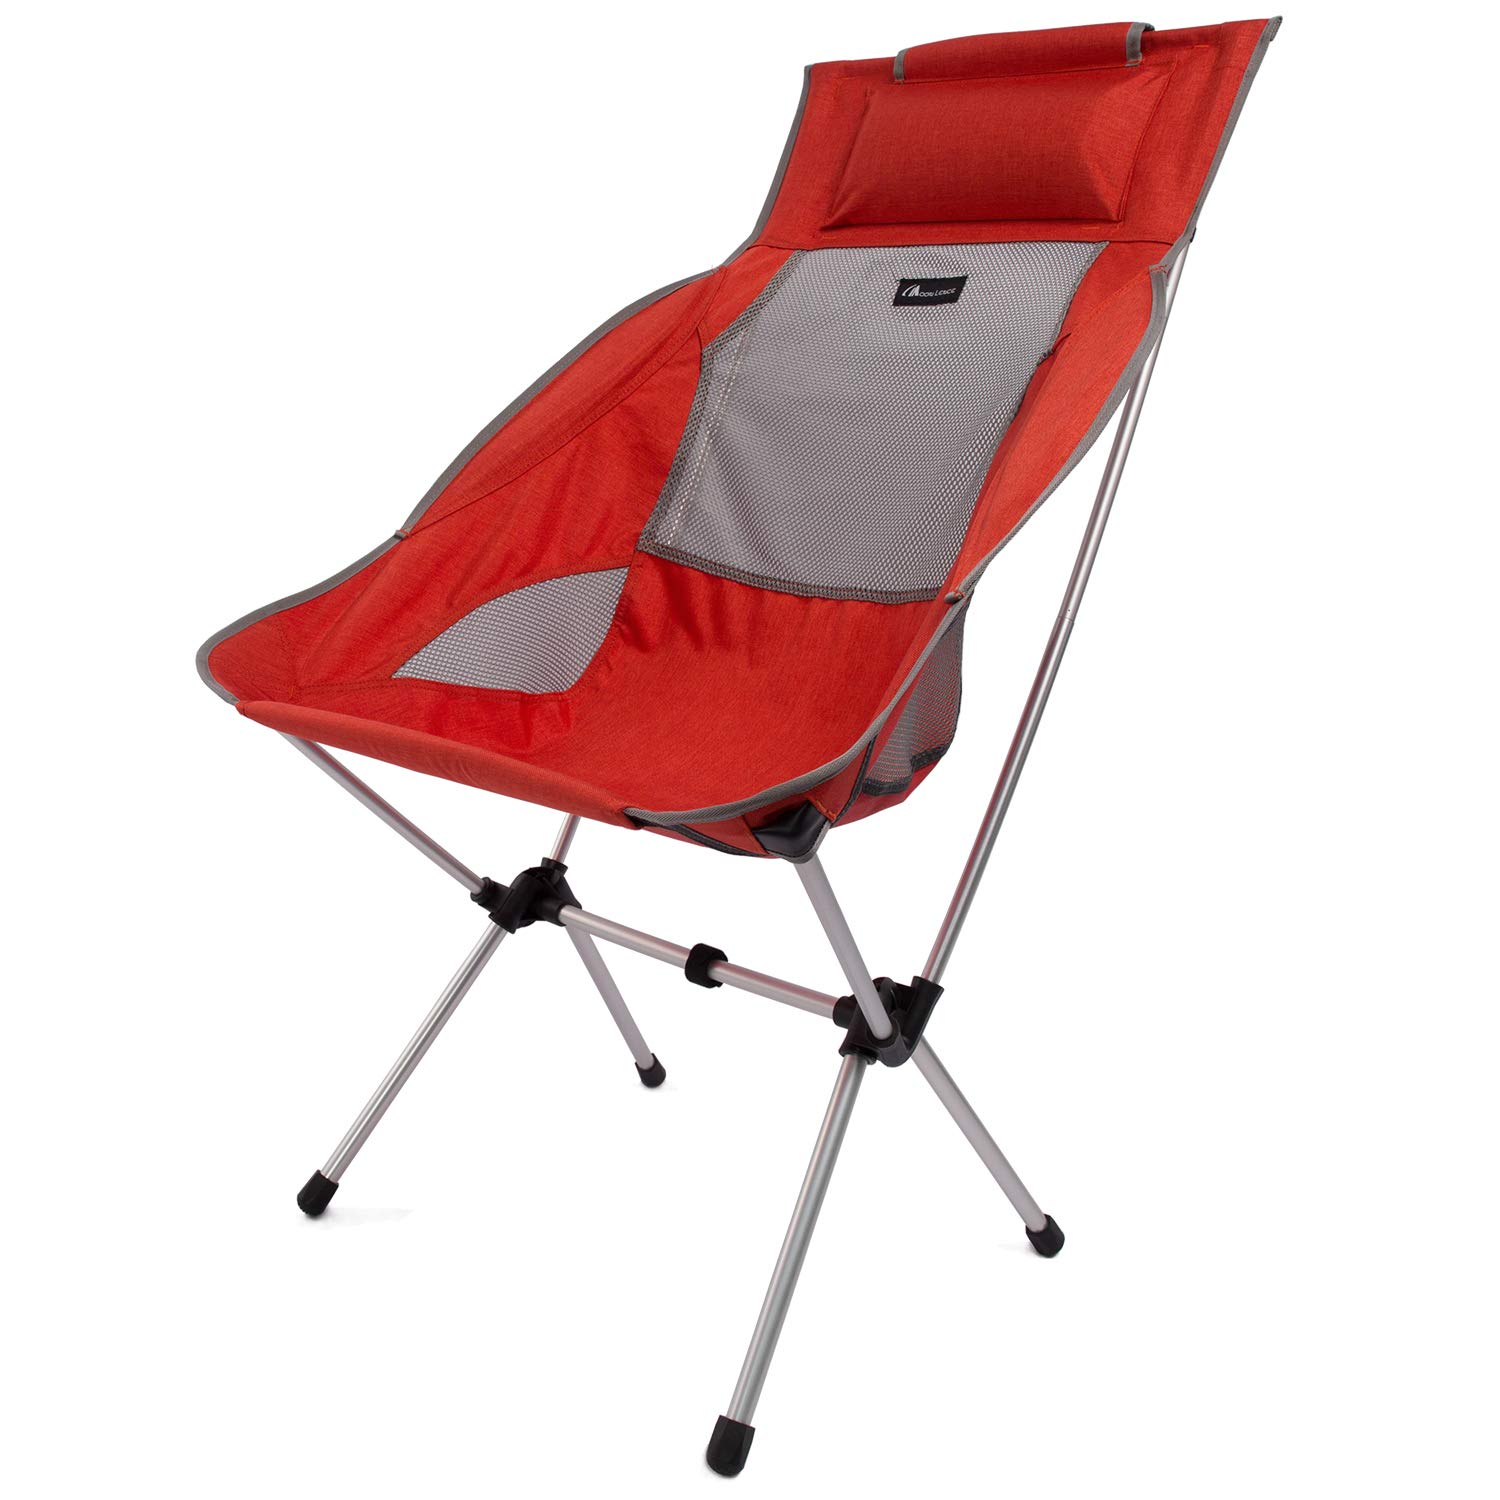 YOYOSTAR アウトドア チェア キャンプ 椅子 背もたれ コンパクト キャンプチェア 超軽量 折りたたみ 収納バッグ付き 持ち運びしやすい 耐荷重180kg